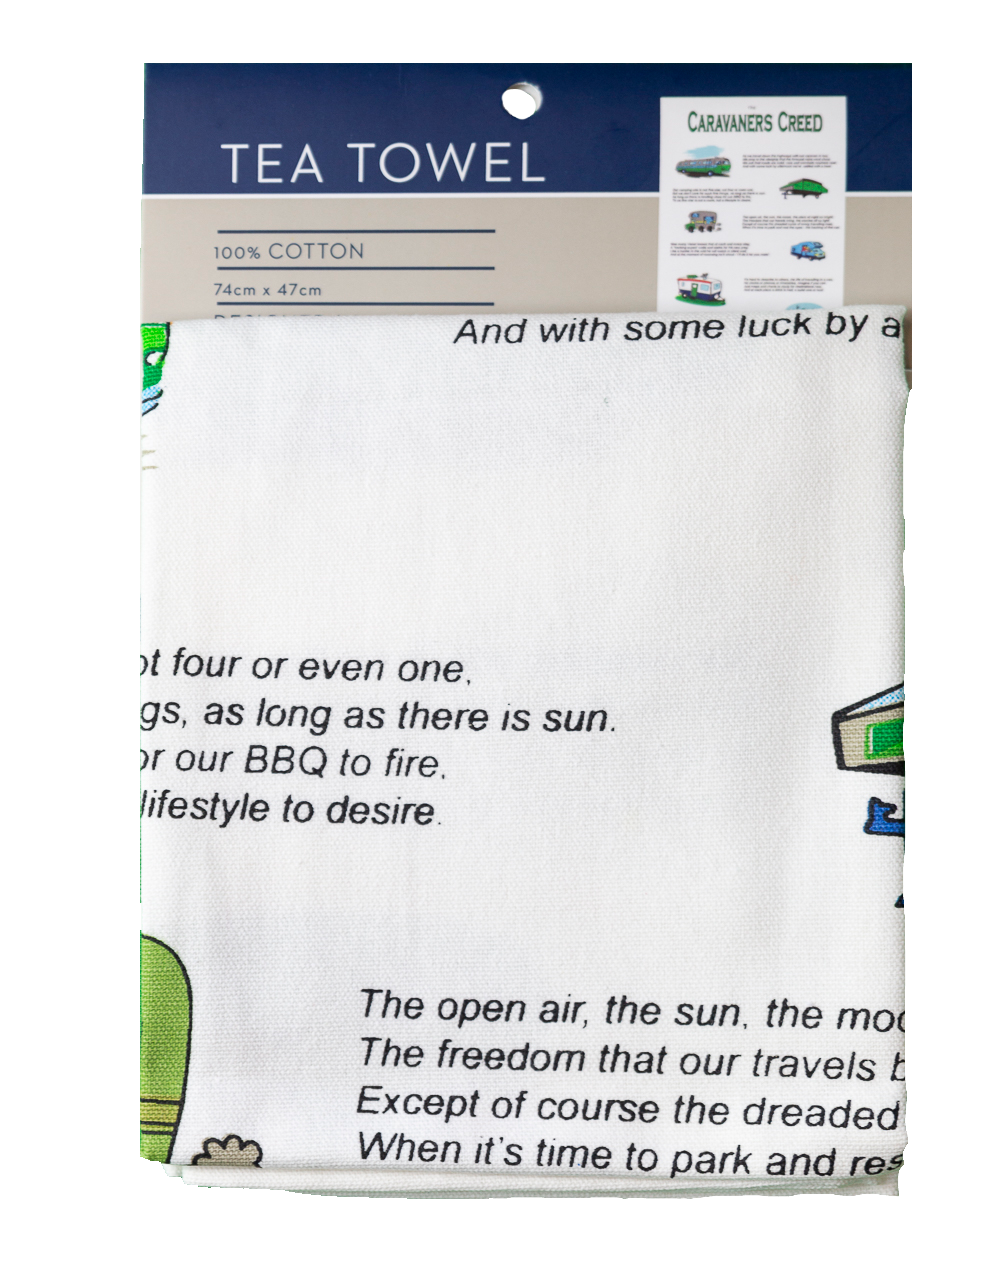 Tea Towel - Caravaners Creed